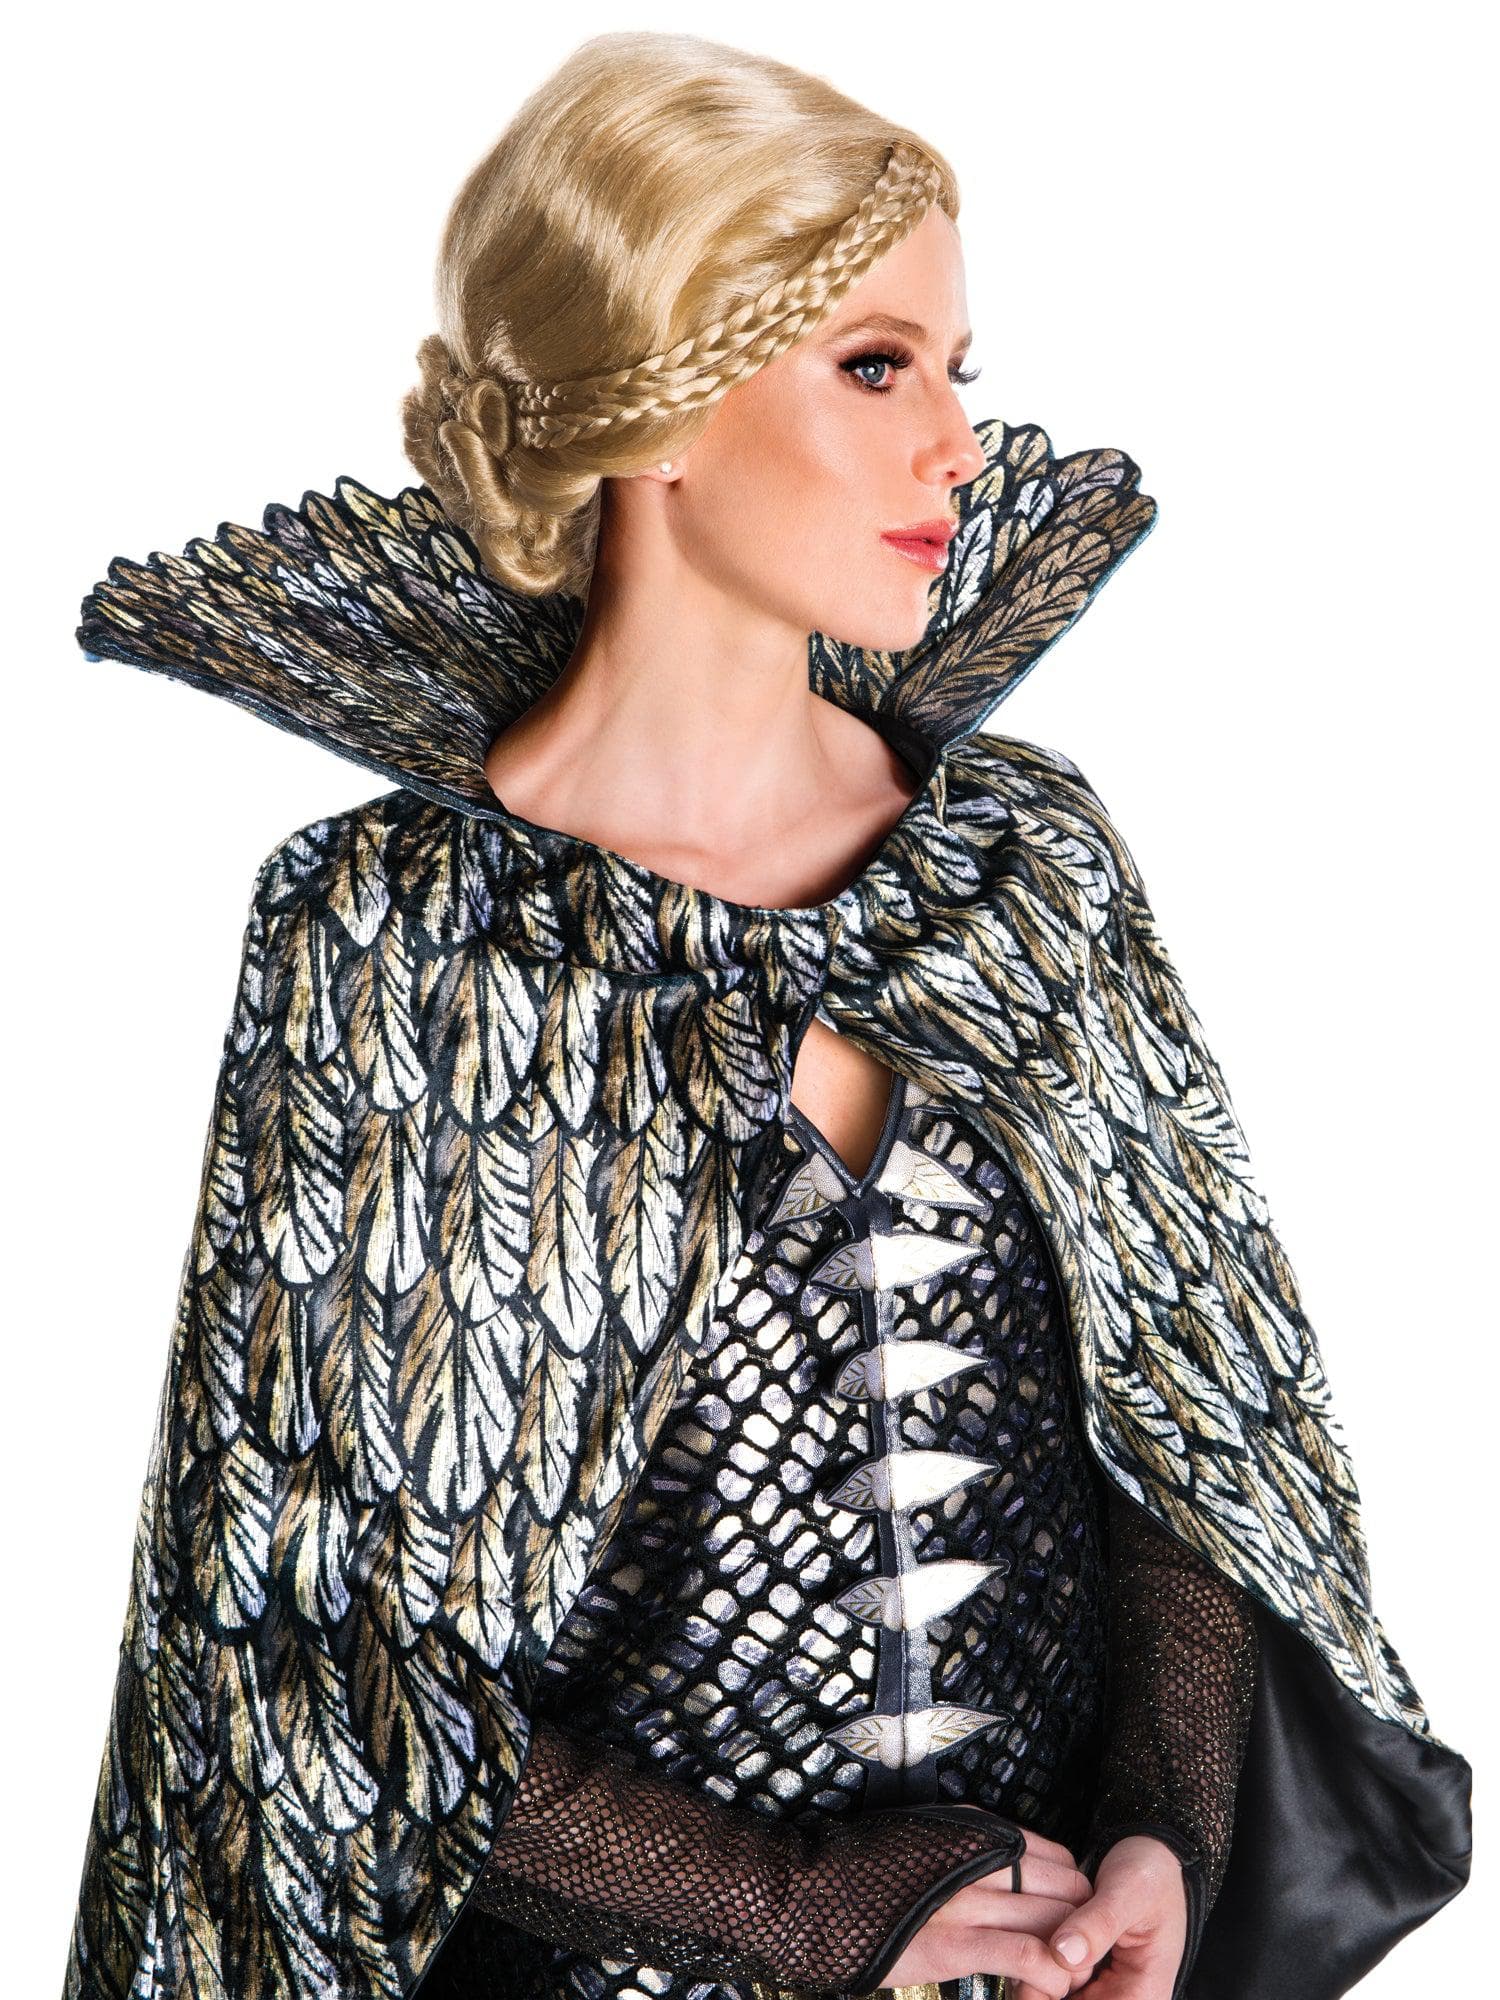 Women's Snow White and the Huntsman Ravenna's Blonde Wig - costumes.com